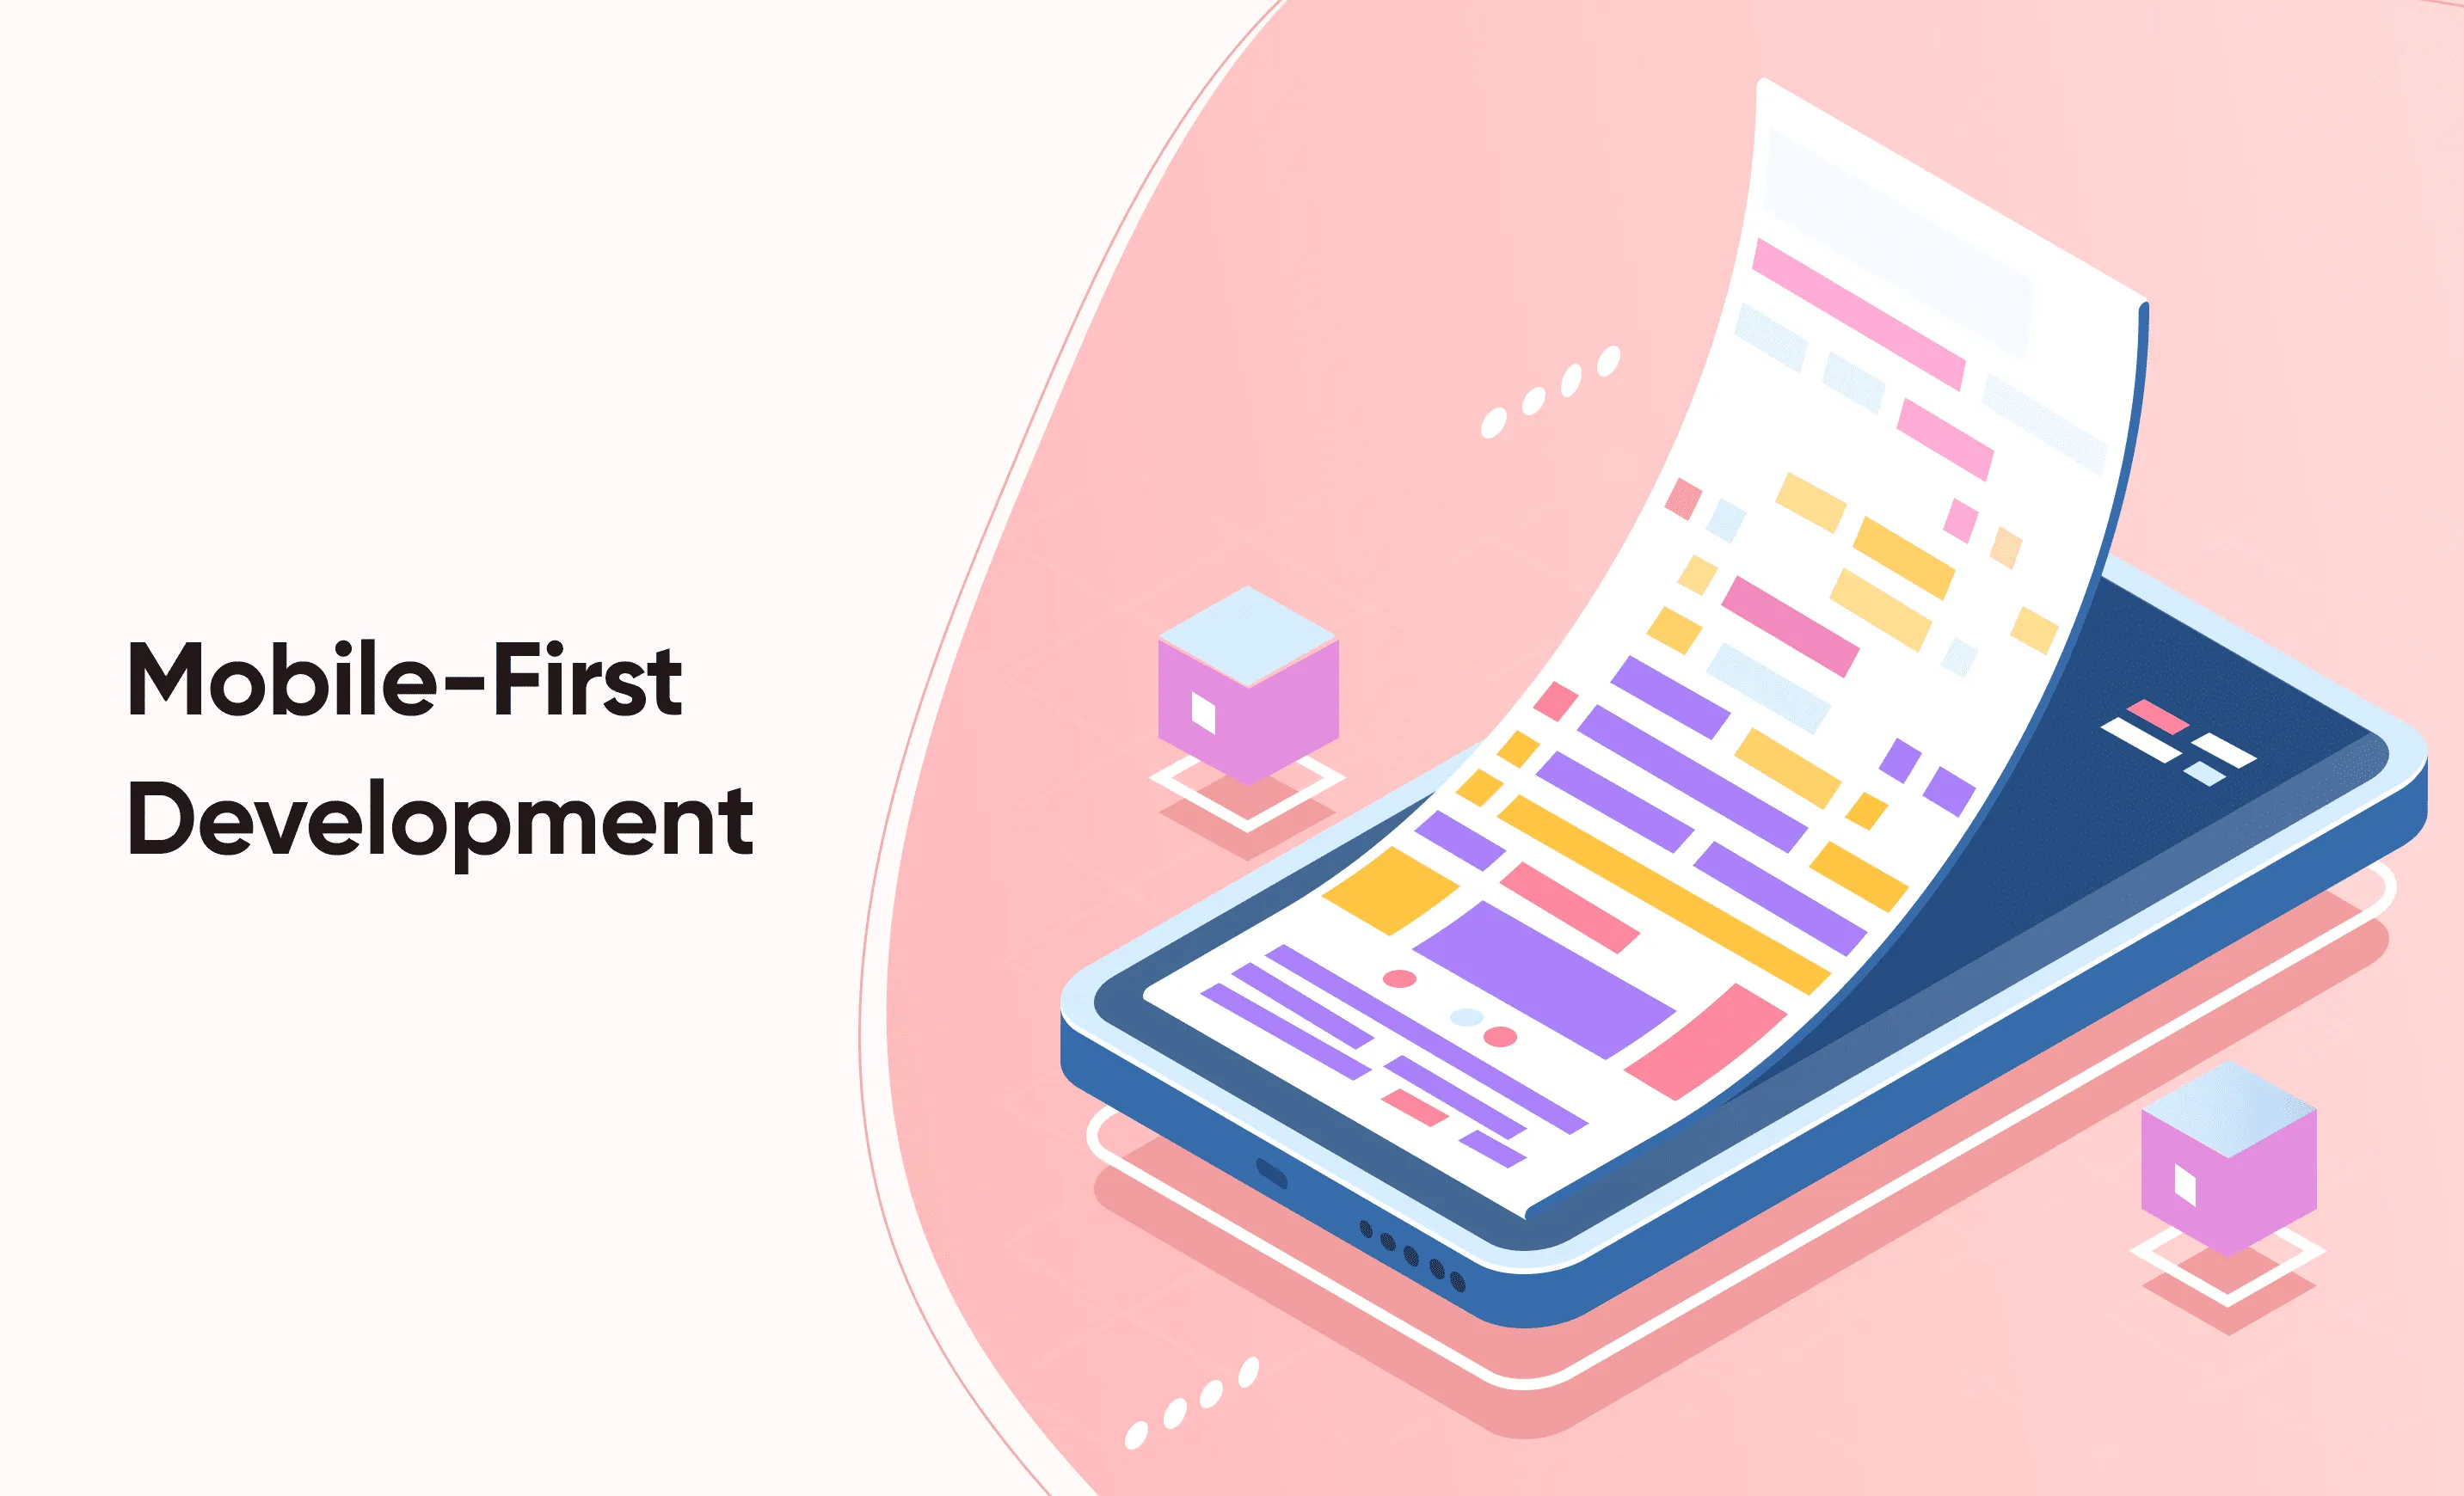 Mobile-First Development